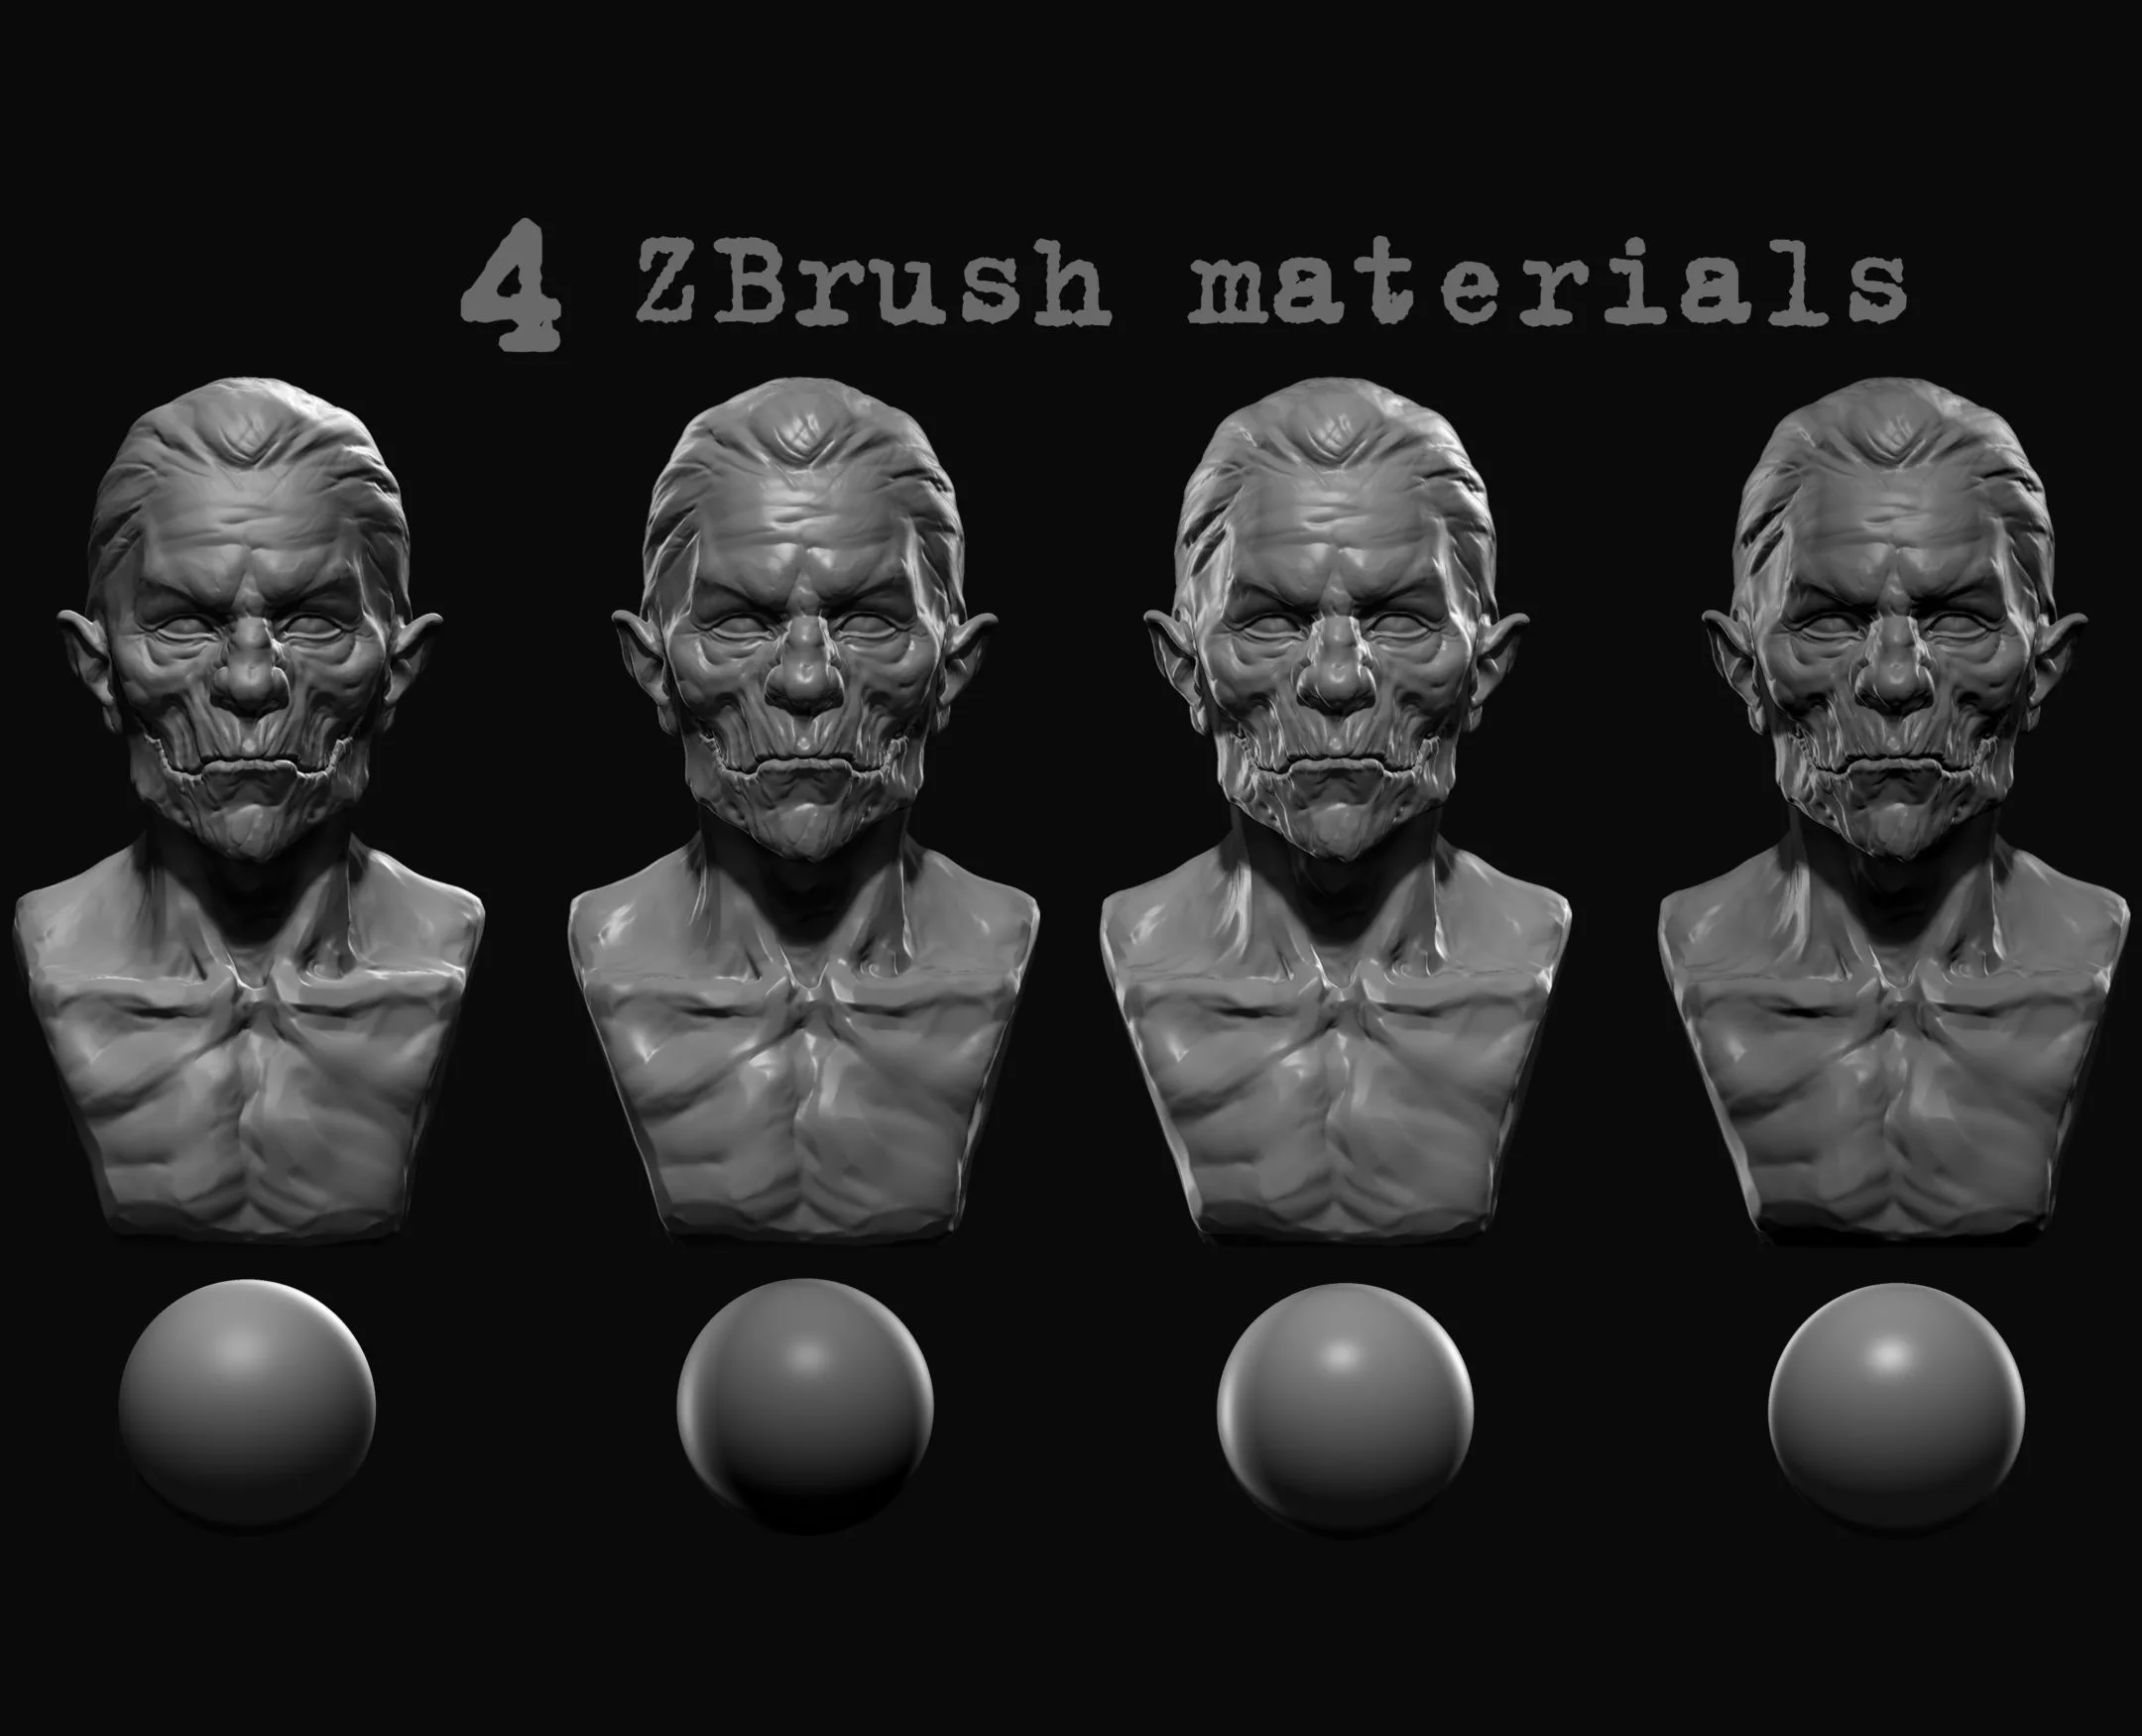 4 ZBrush materials